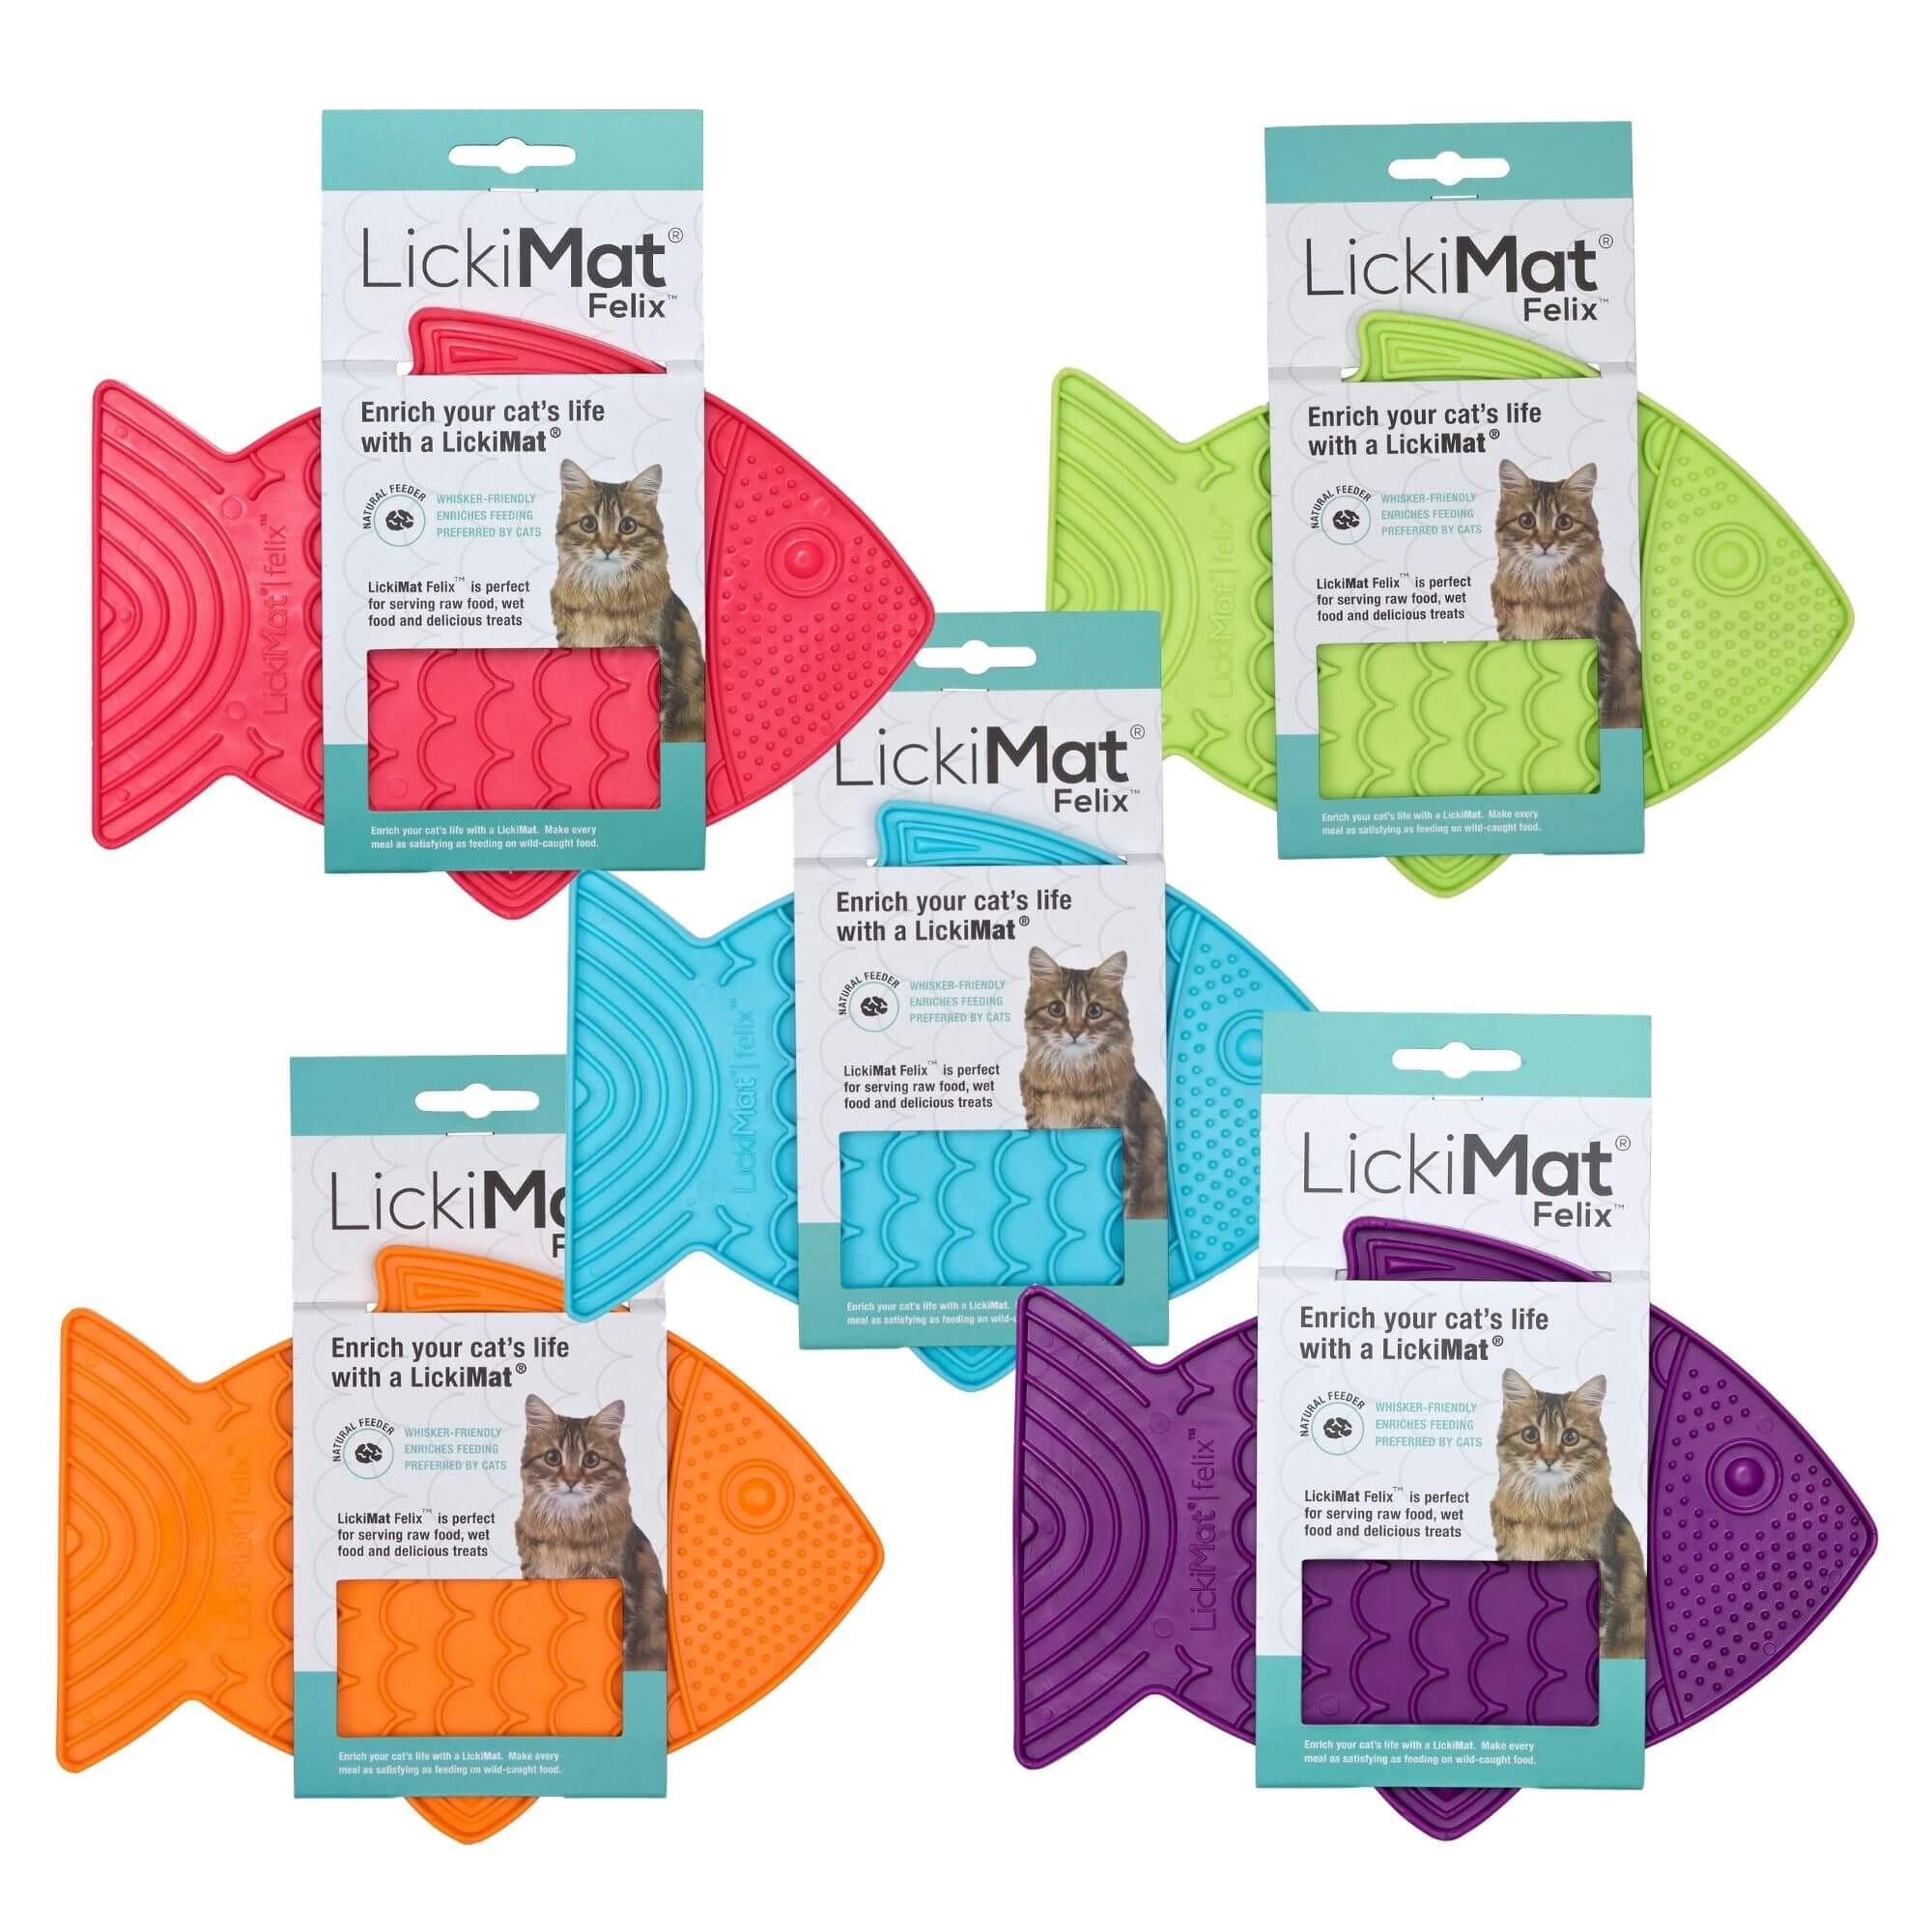 LickiMat Sprinkles – Innovative Pet Products